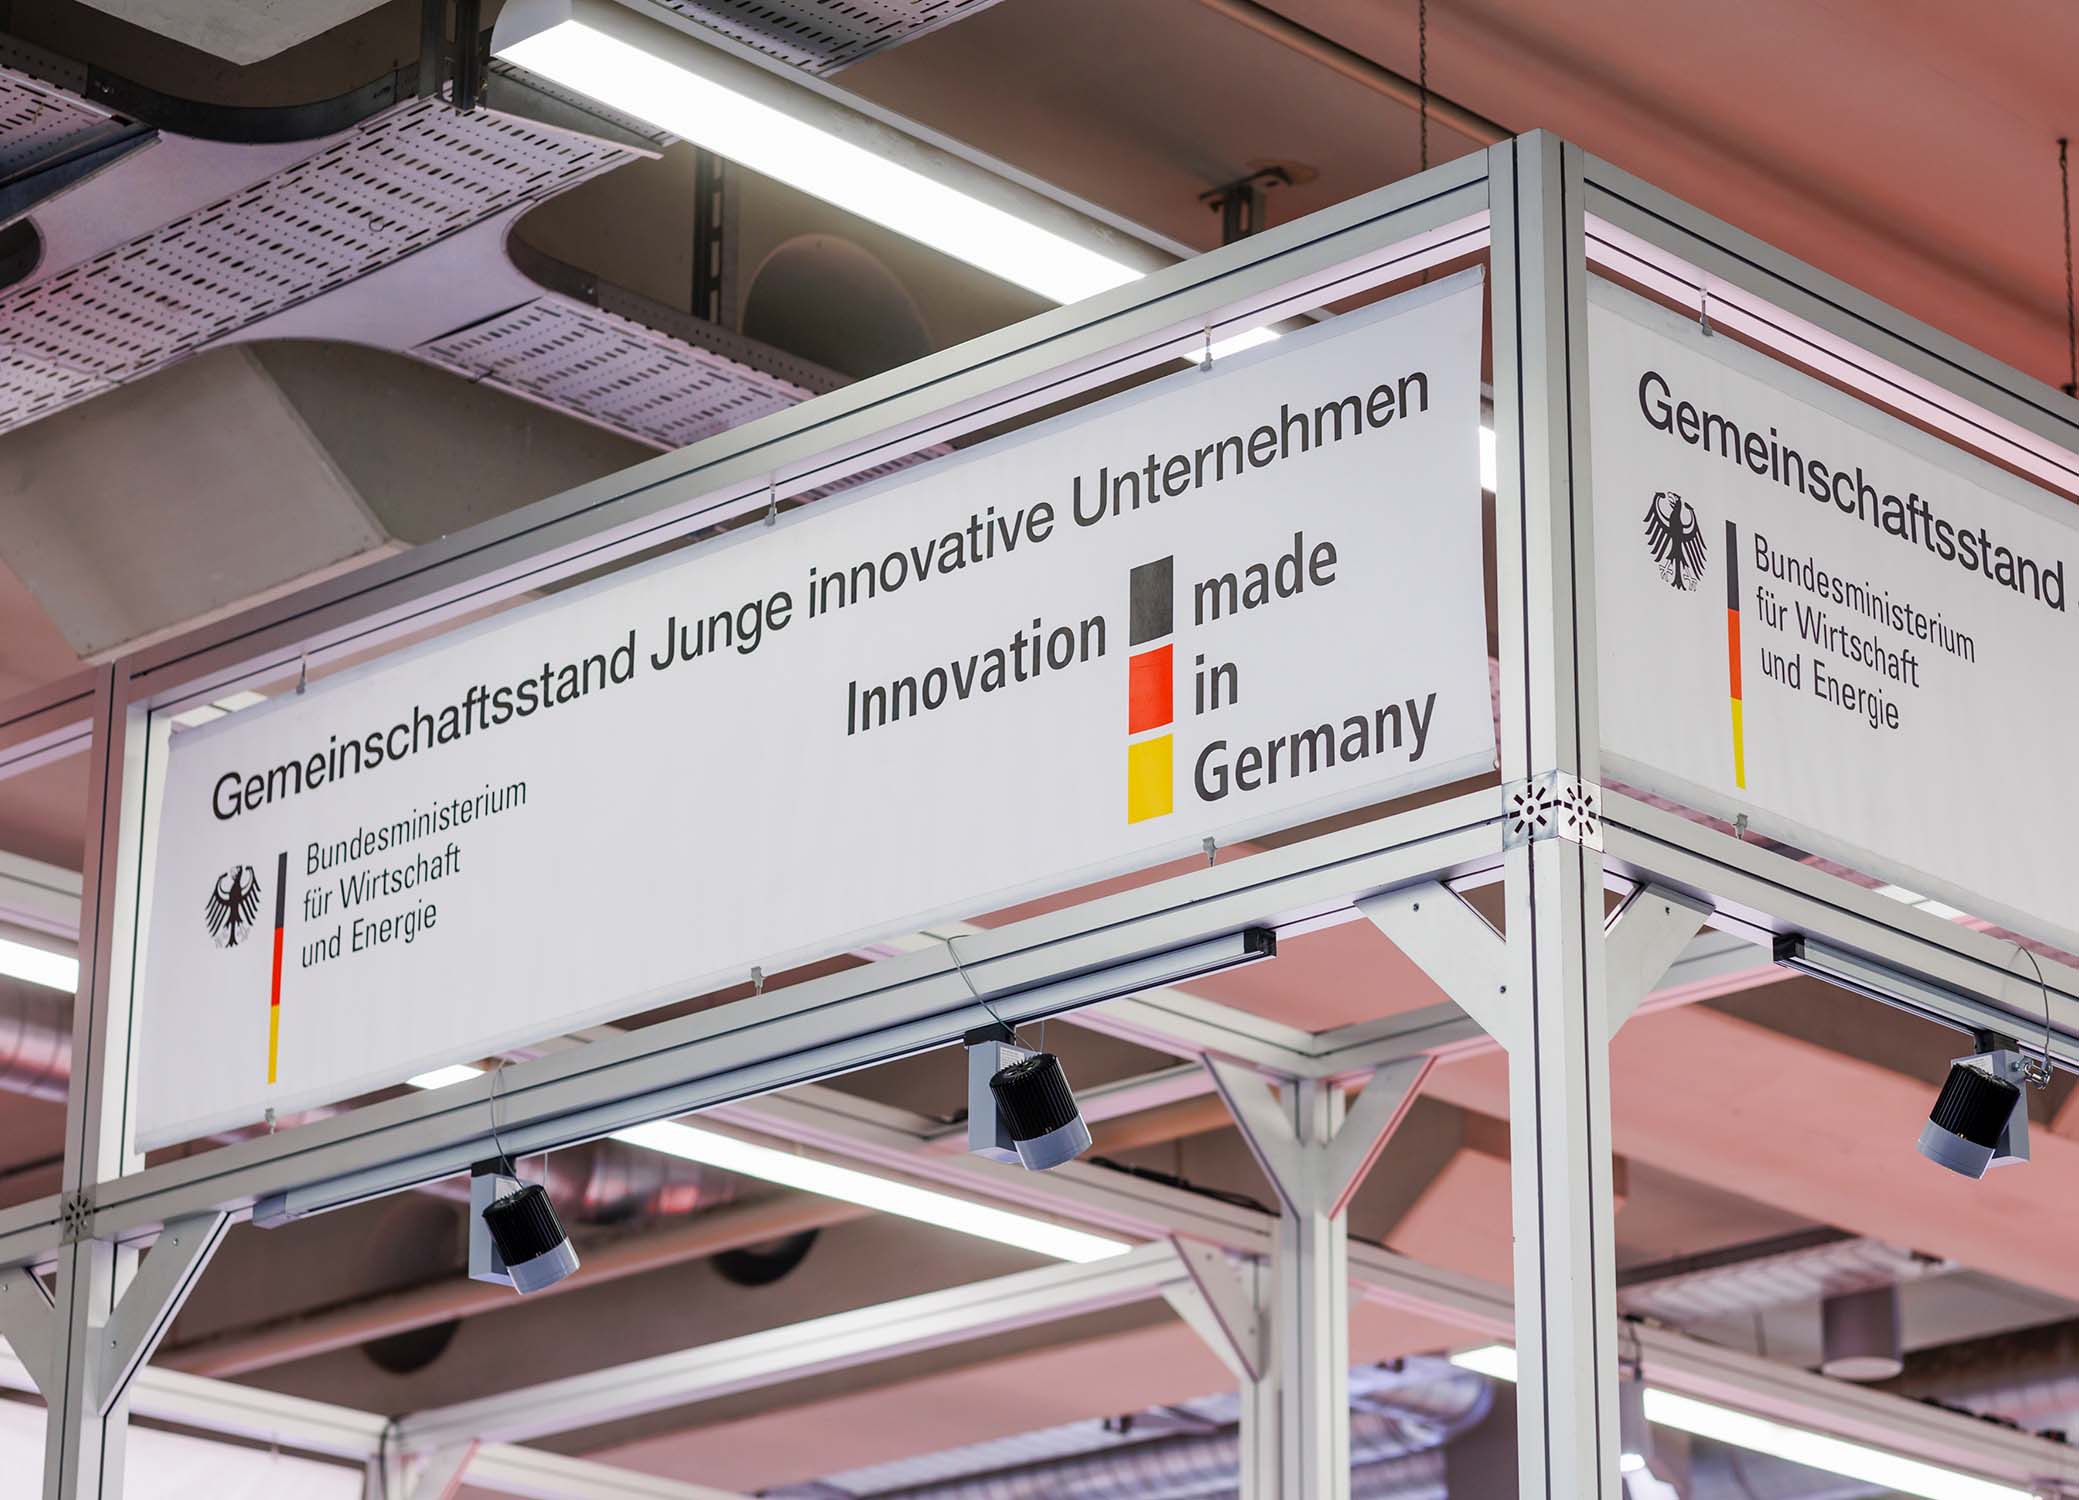 Gemeinschaftsstand „Innovation made in Germany“